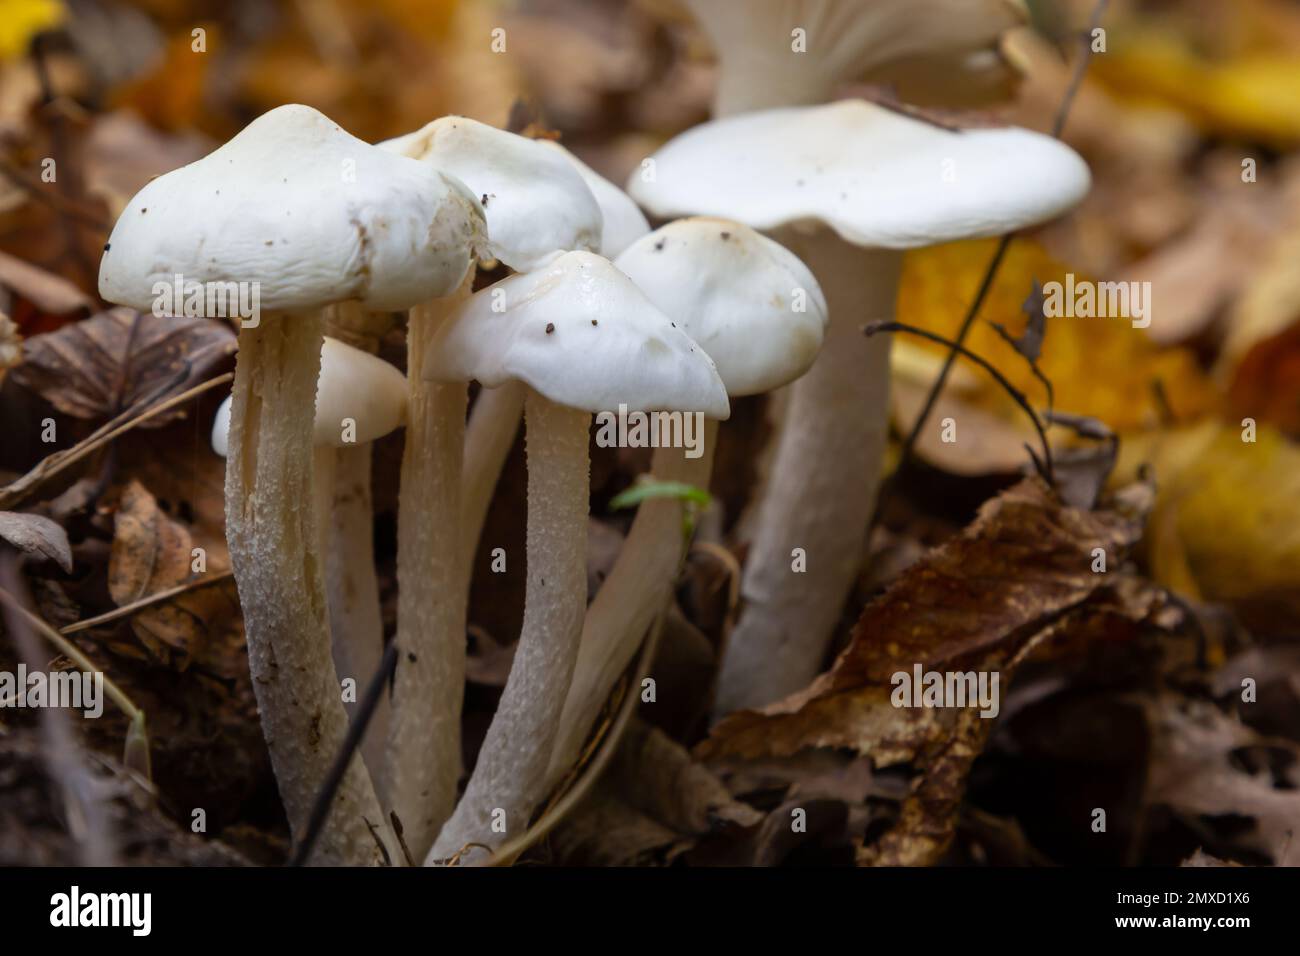 Ivory Woodwax Fungi - Hygrophorus eburneus, growing in Beech leaf litter. Stock Photo